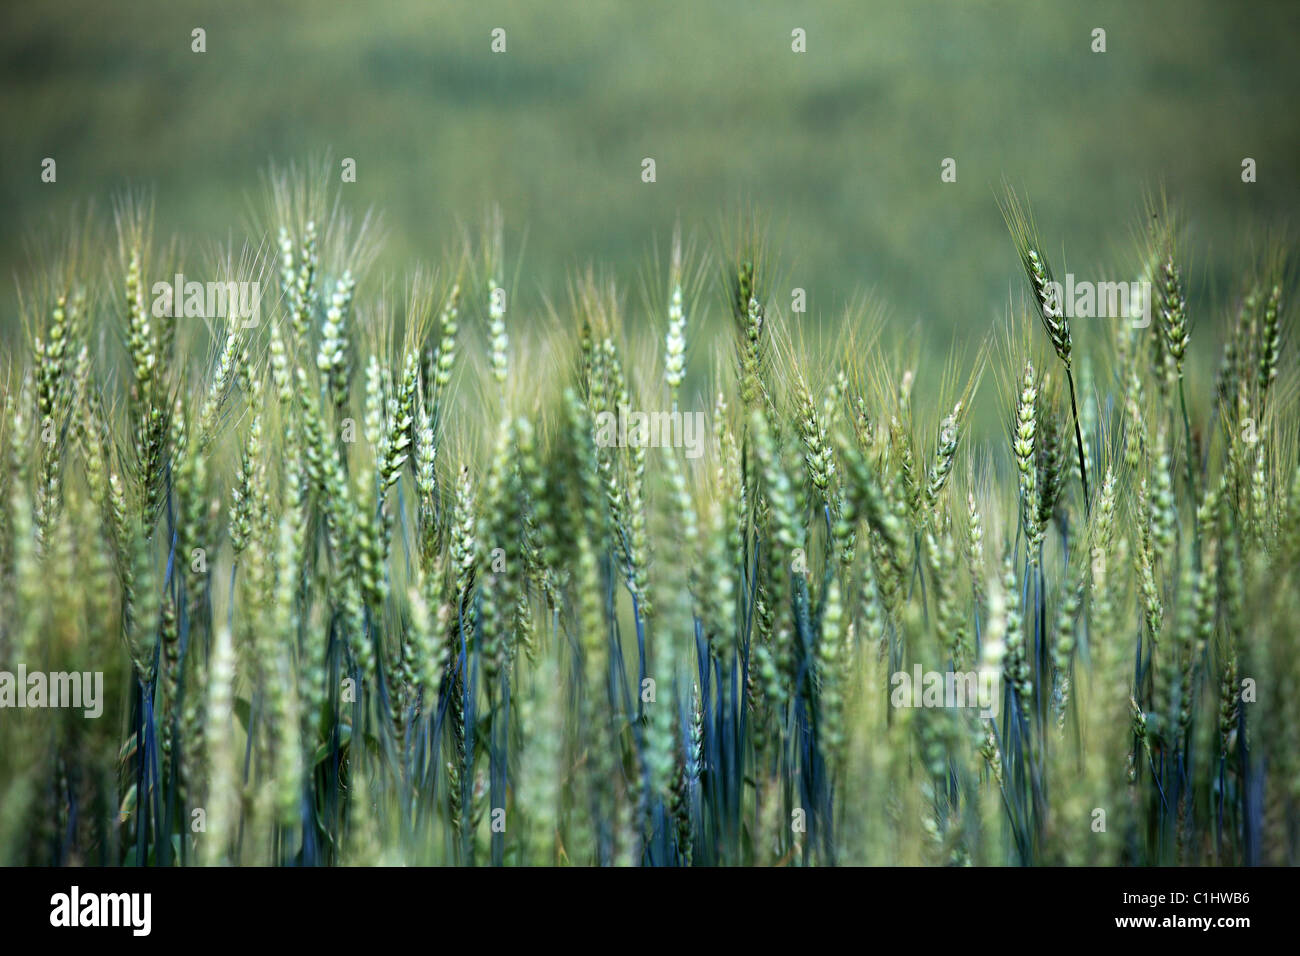 Barley field abstract Nepal Himalaya Stock Photo